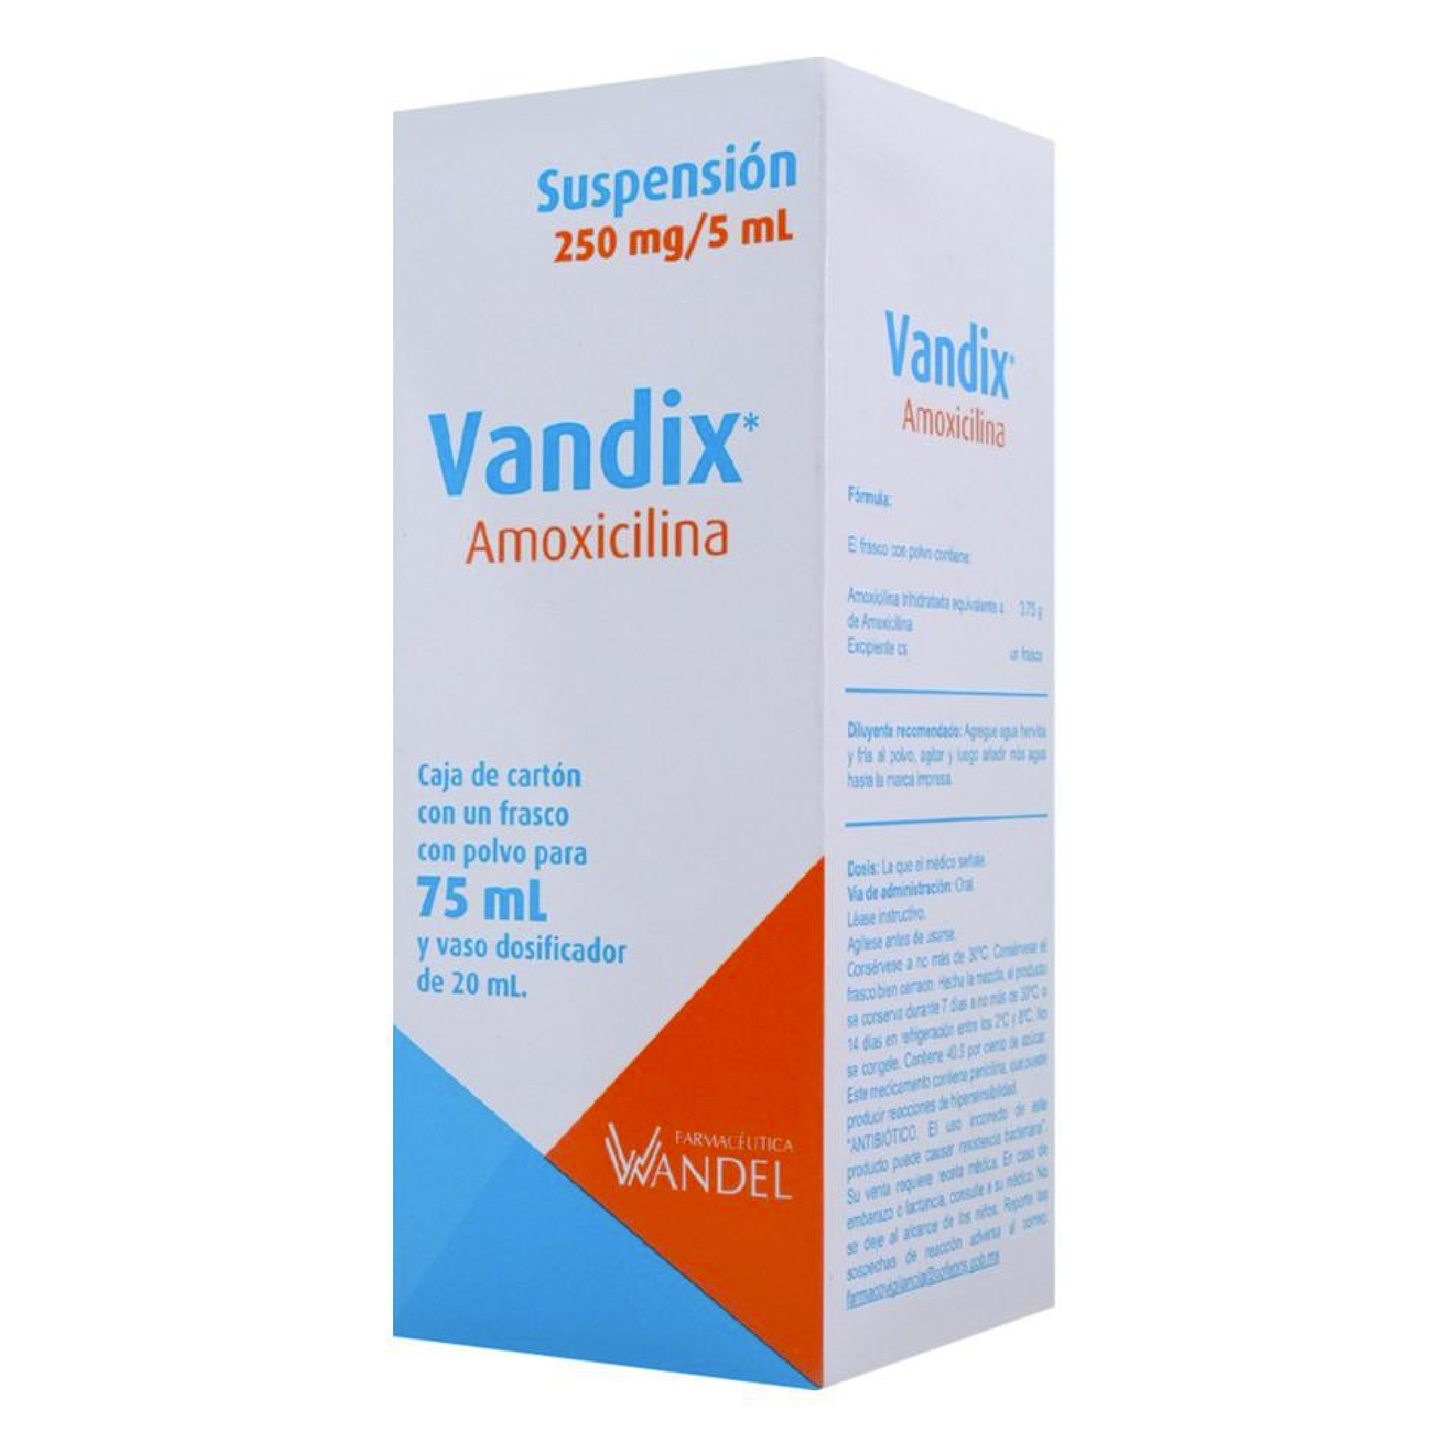 Vandix (Amoxicilina) Sus 250mg/5ml Cja c fco 75ml